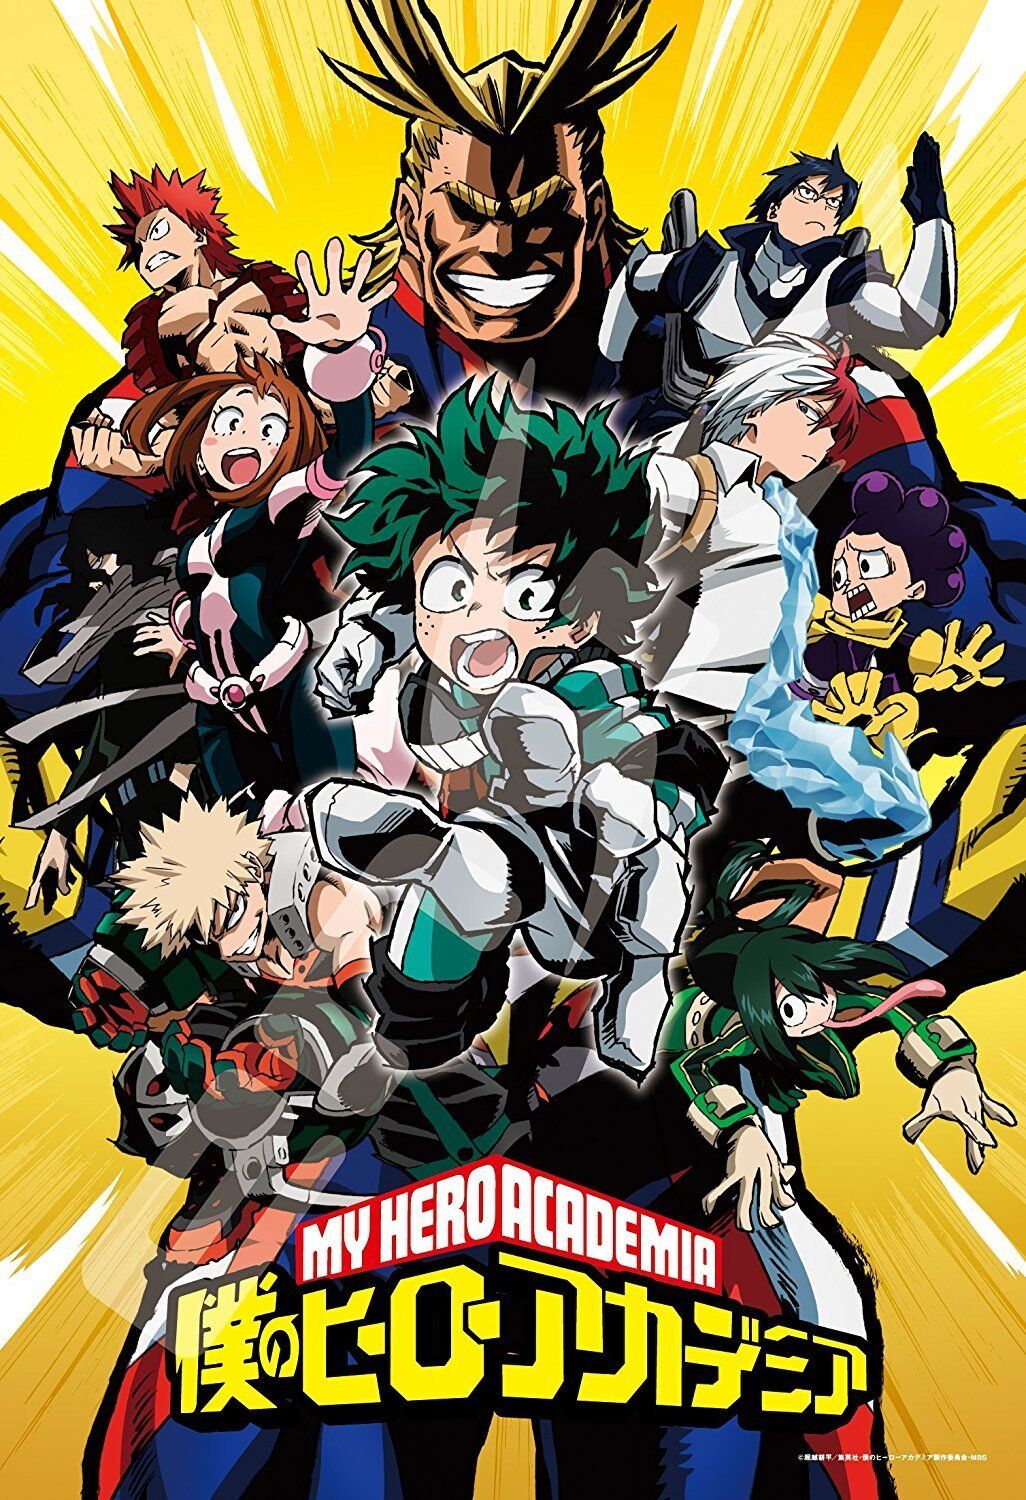 My Hero Academia Season 3 - Opening